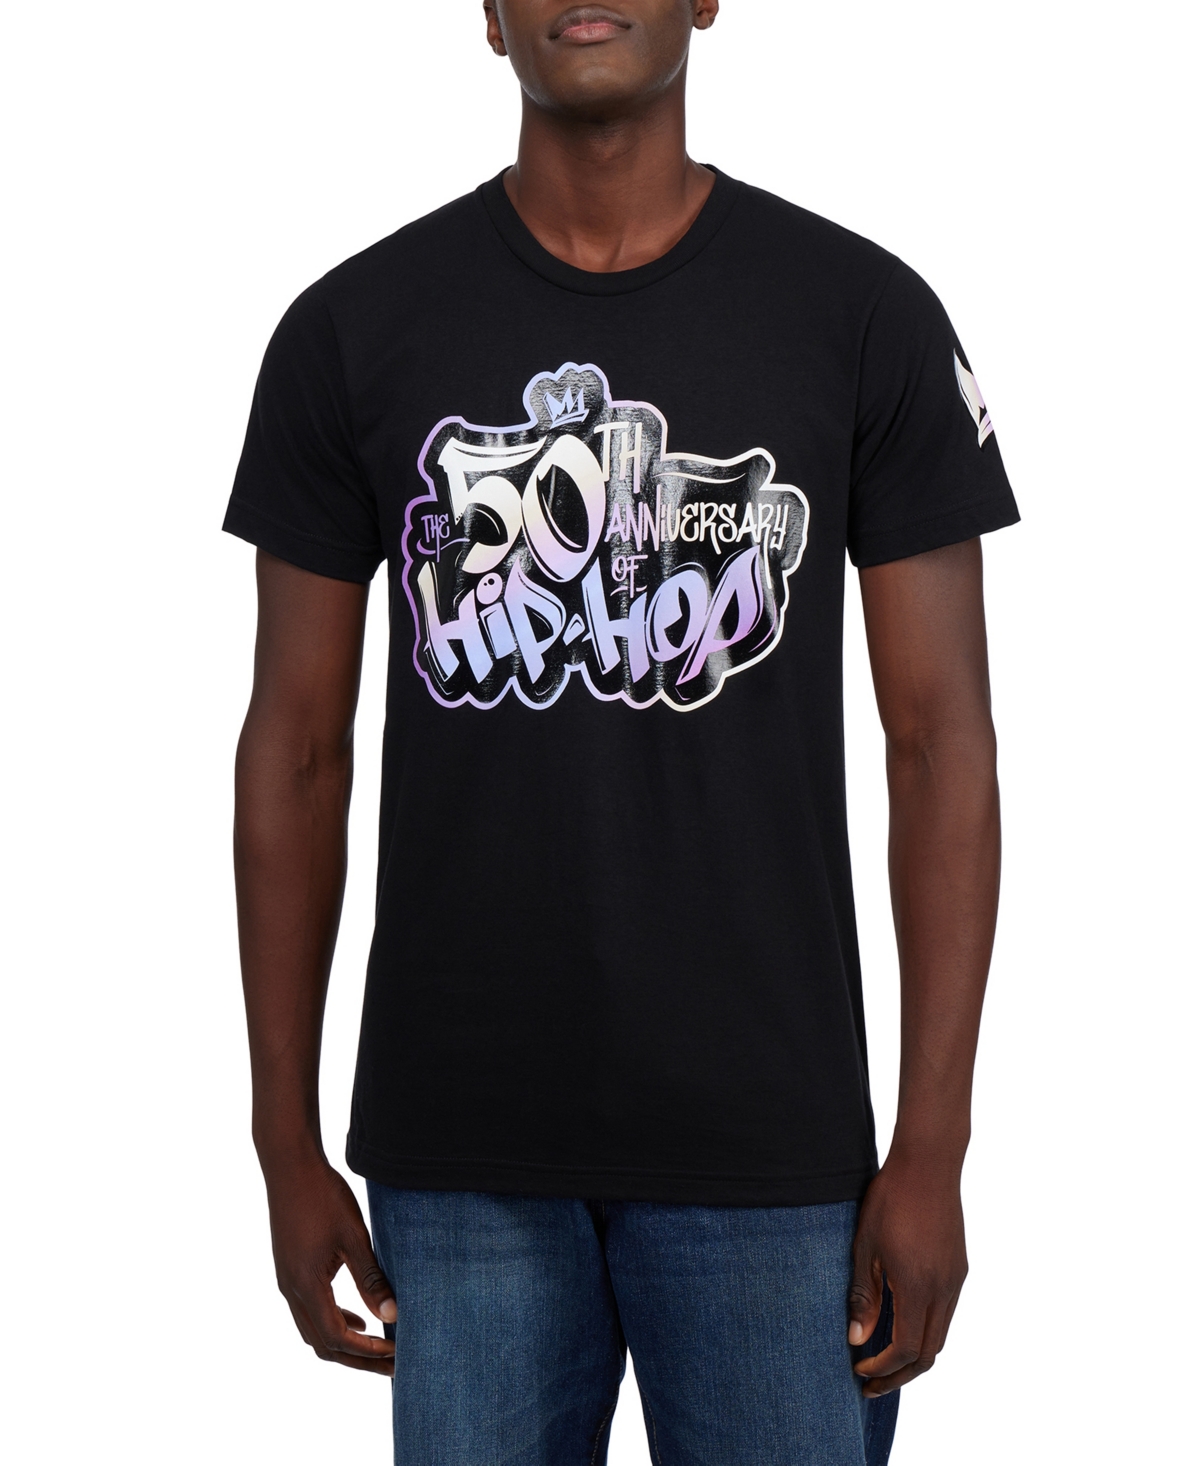 50 Year Anniversary Of Hip Hop Men's Fade Away Graphic T-shirt - Black